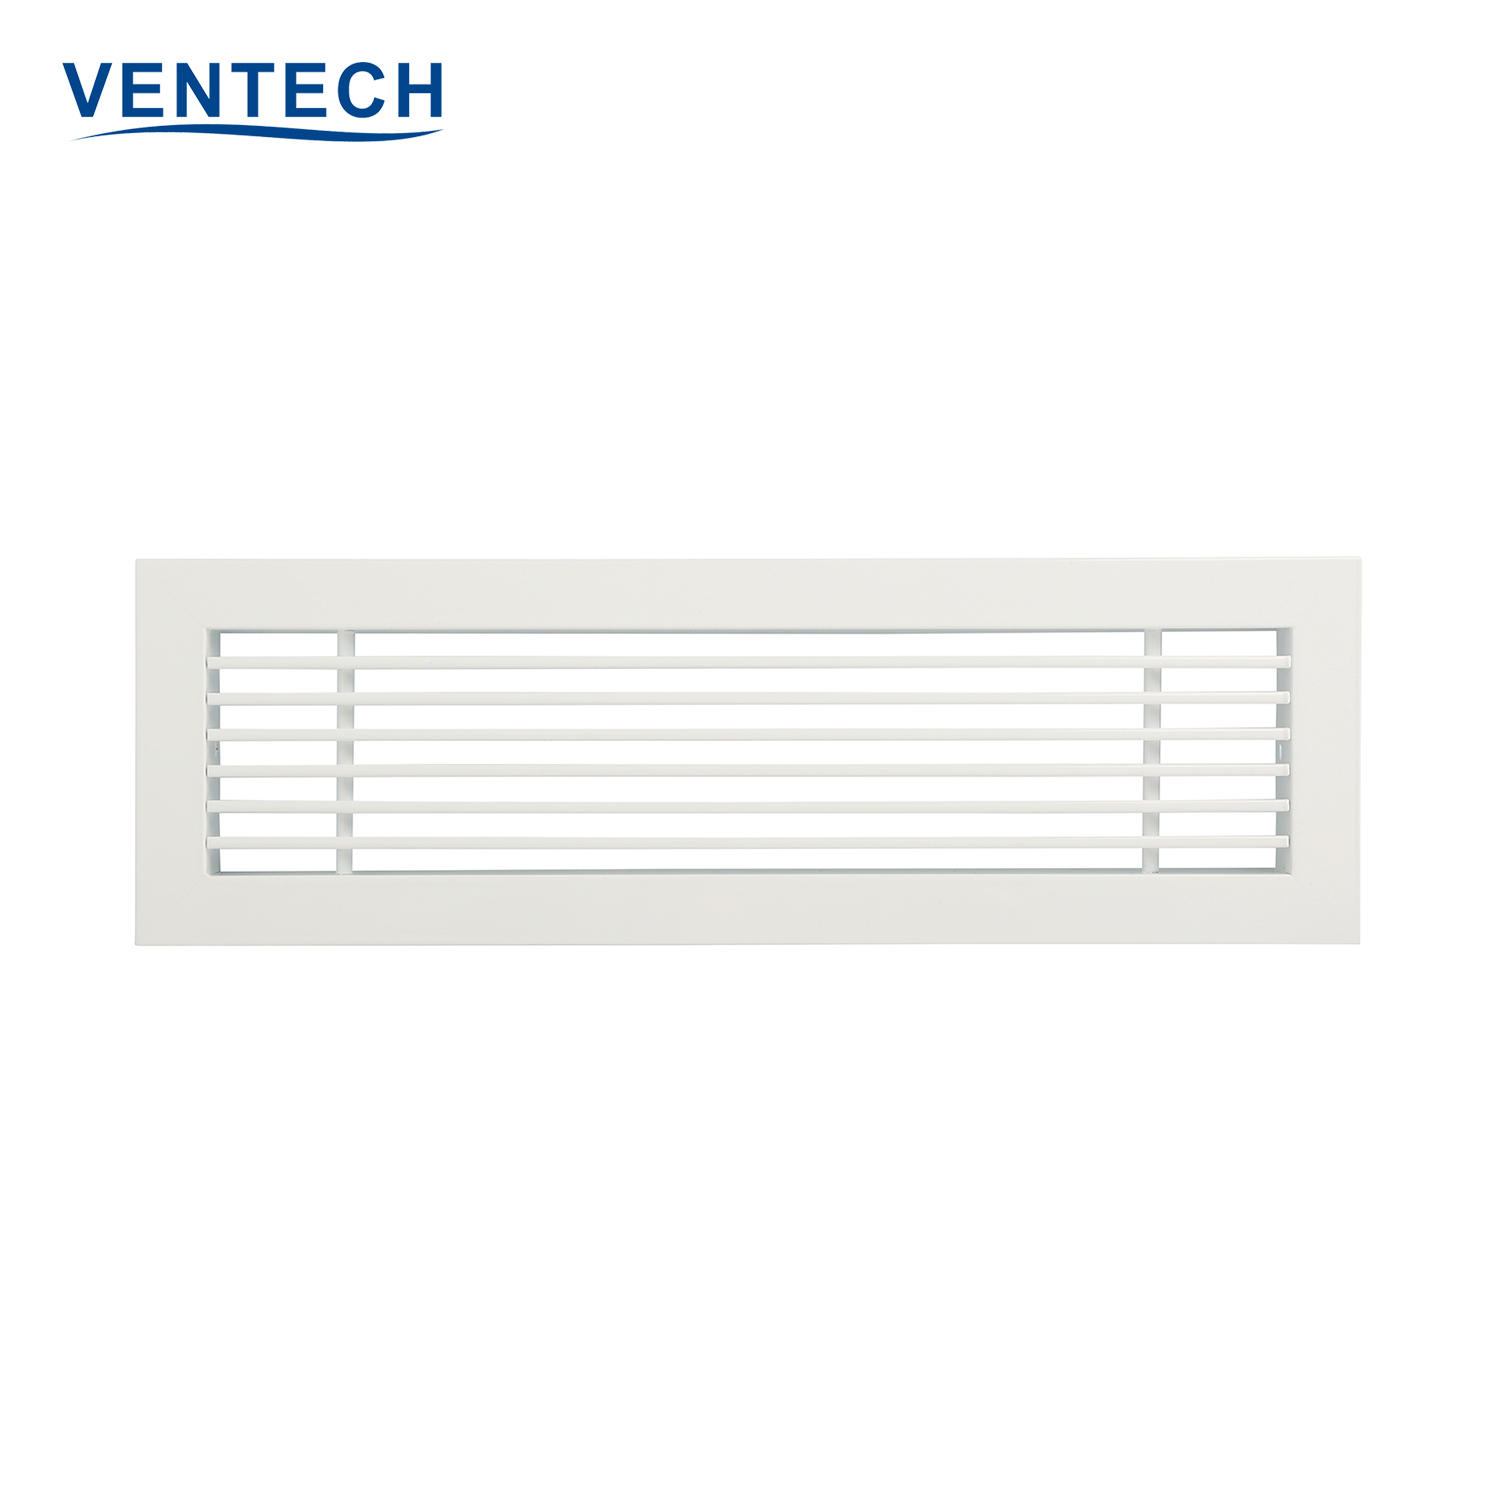 Ventech High Quality Supply Linear Bar Aluminum Ventilation Air Grille